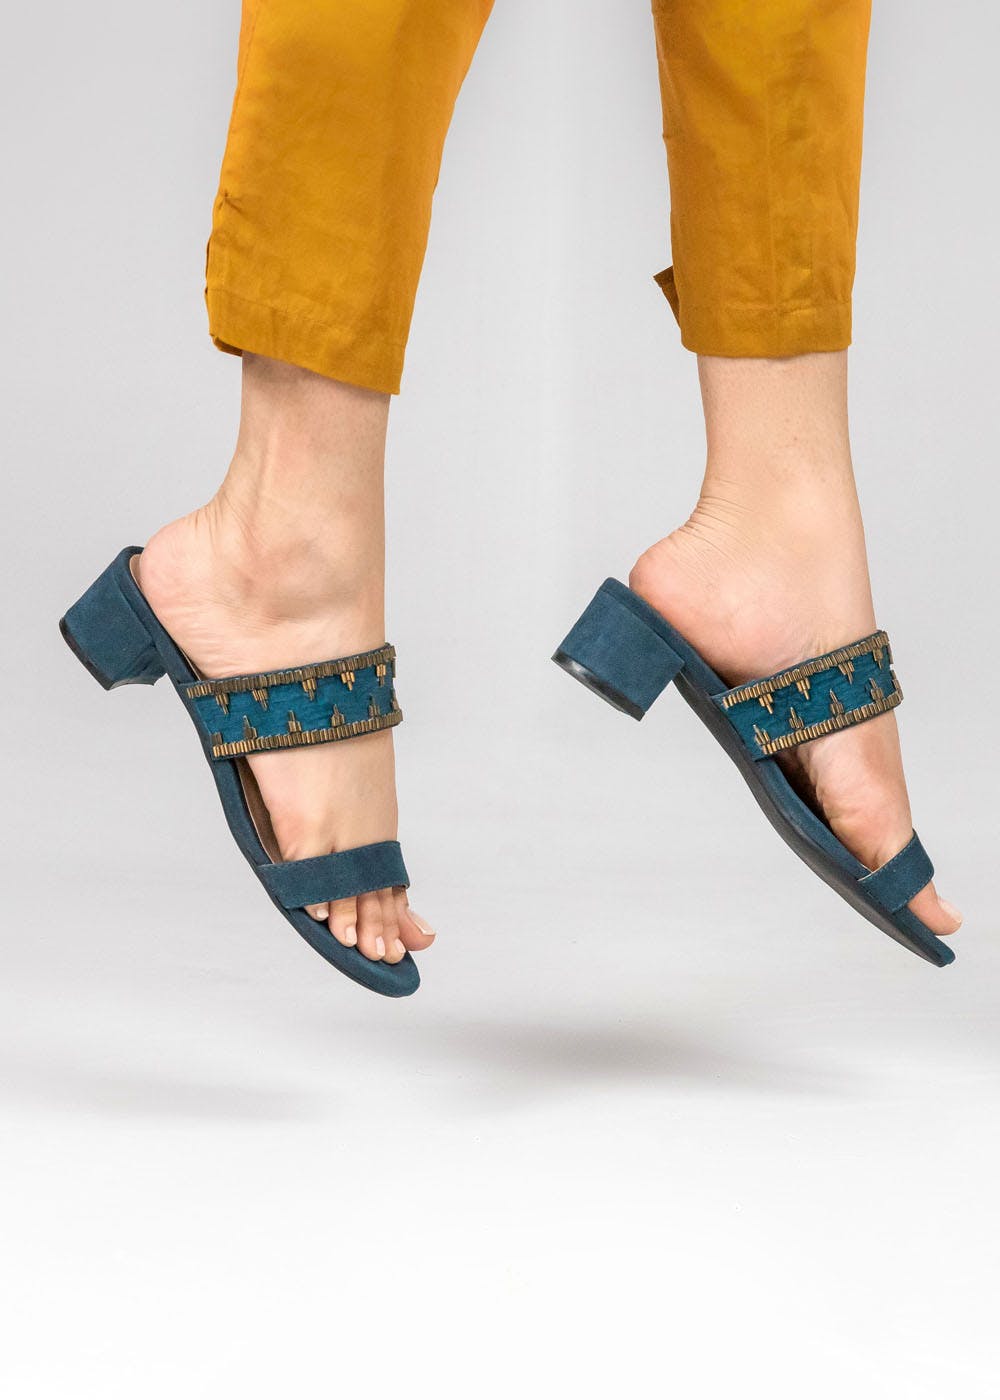 turquoise block heels